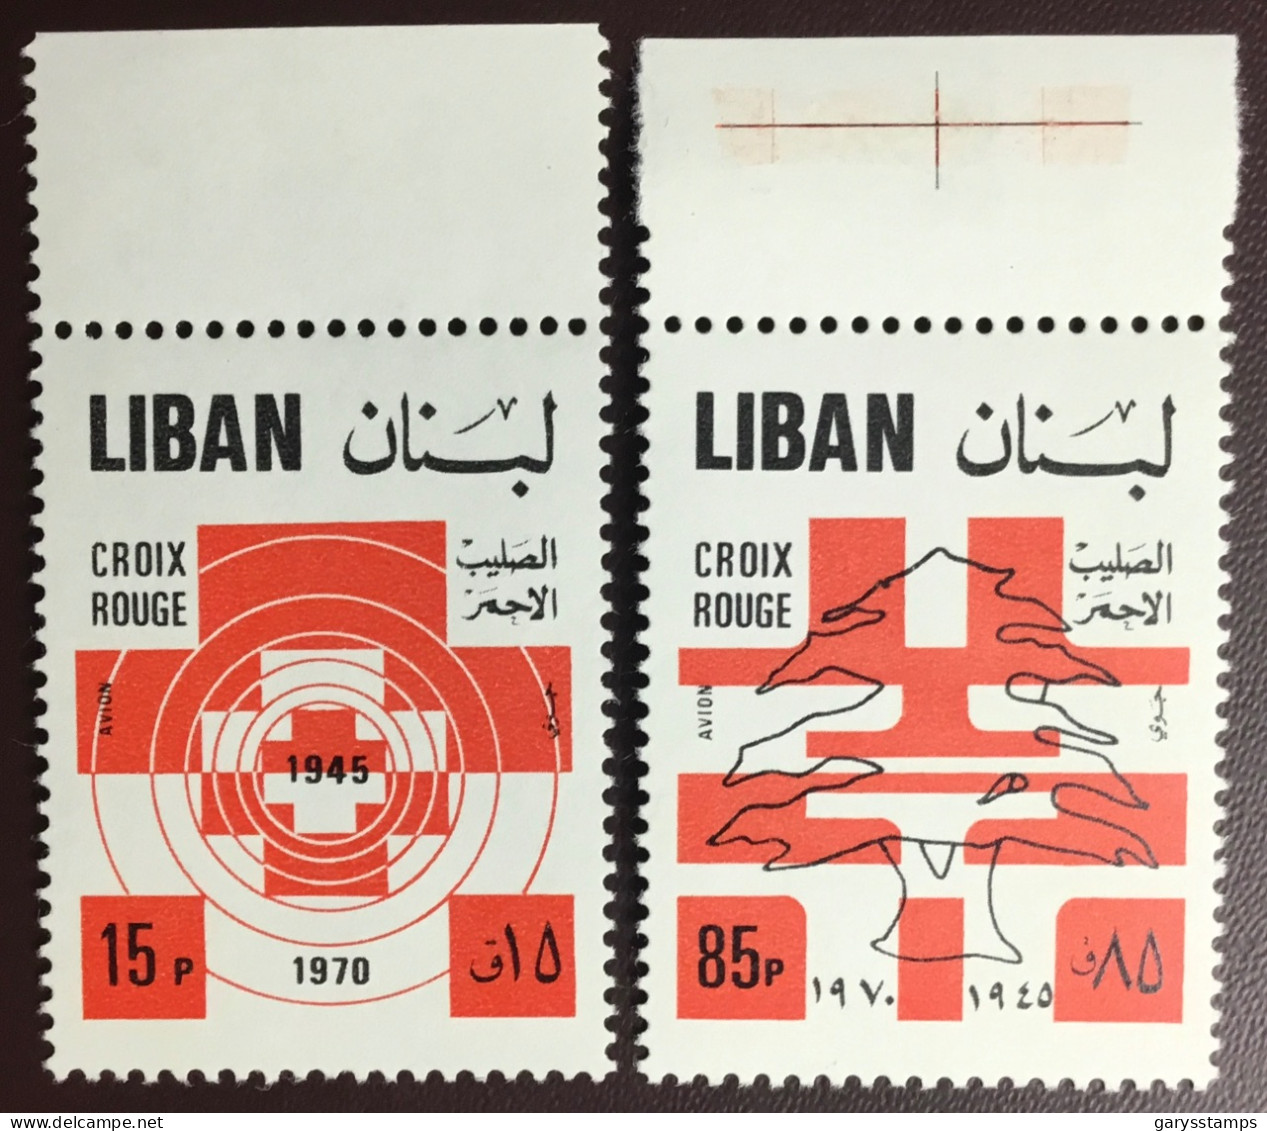 Lebanon 1971 Red Cross MNH - Lebanon